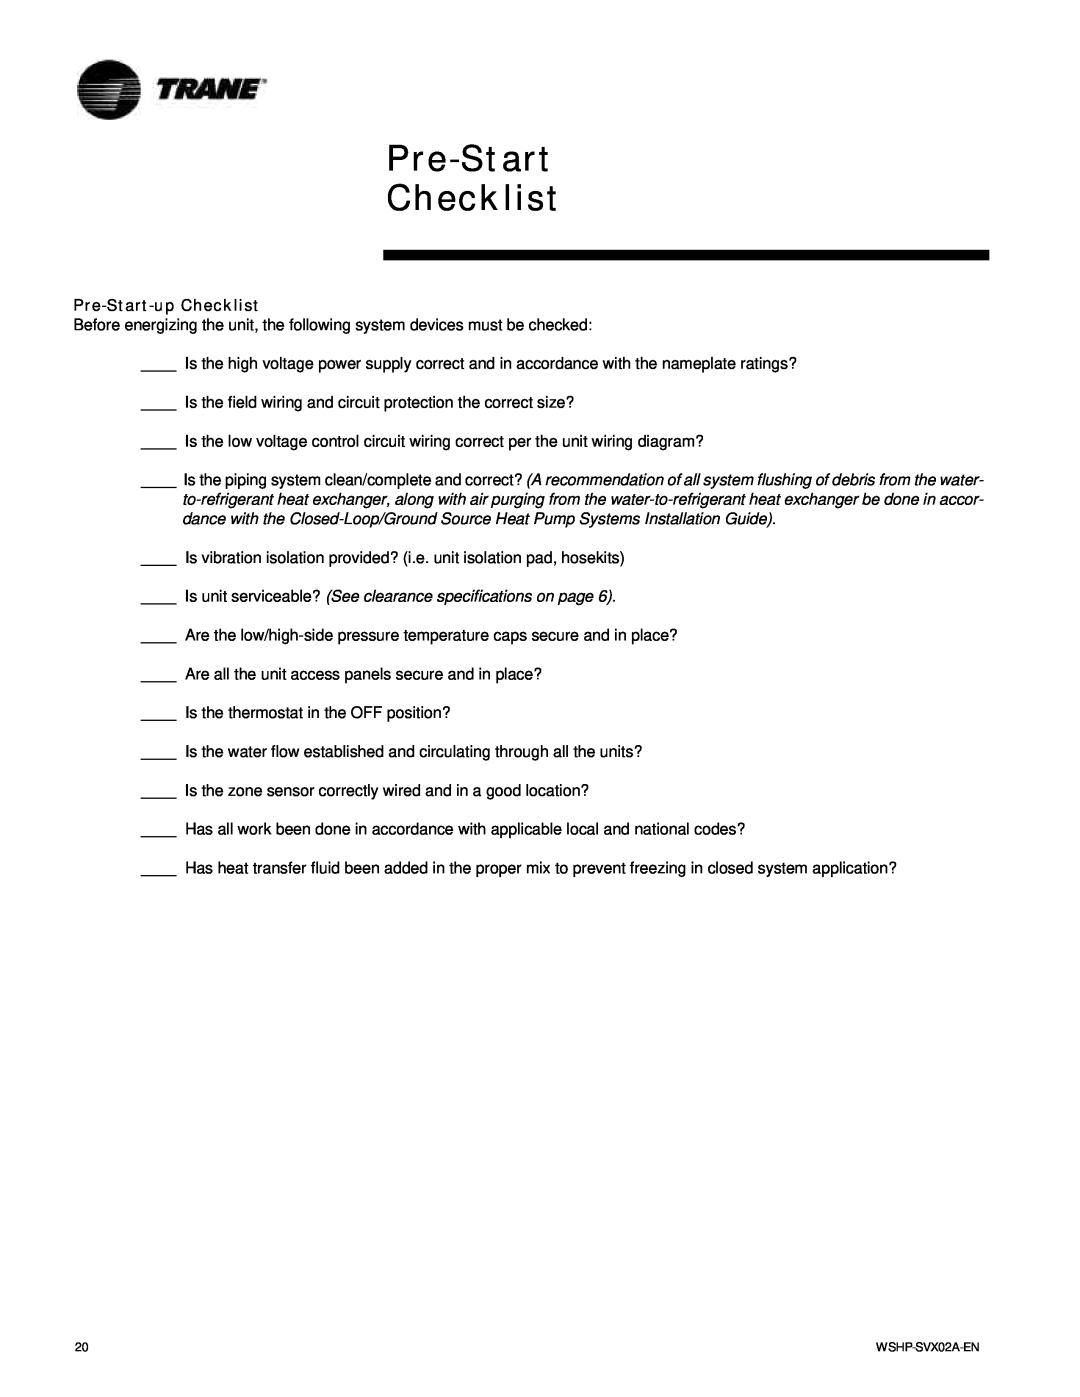 Trane GSWD, EXWA, WPWD manual Pre-Start Checklist, Pre-Start-upChecklist 